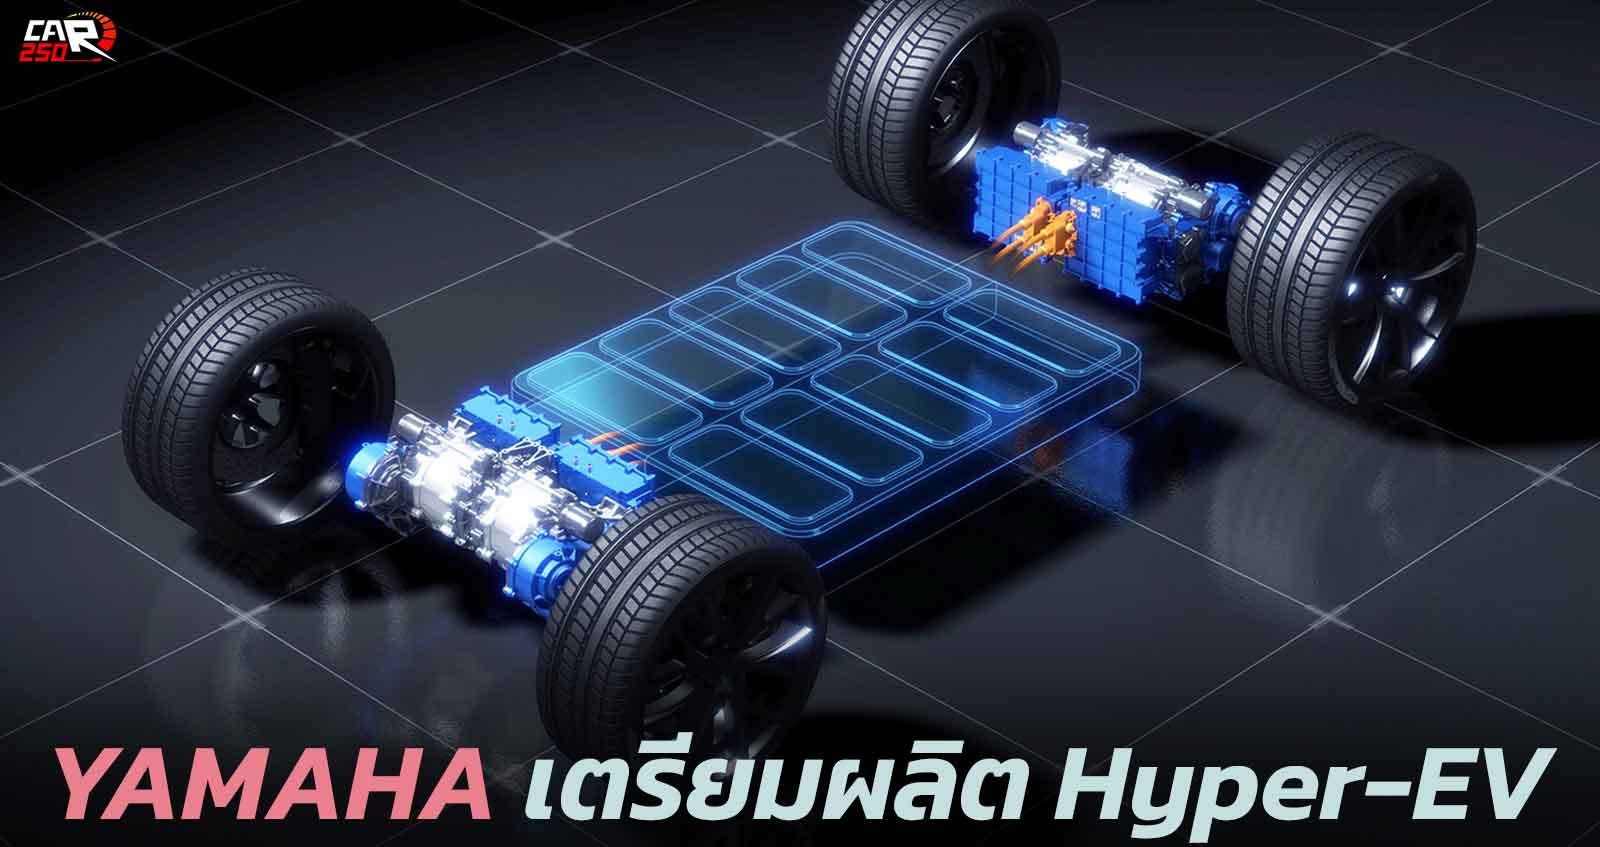 YAMAHA เตรียมผลิตรถยนต์ Hyper-EV 350 กิโลวัตต์